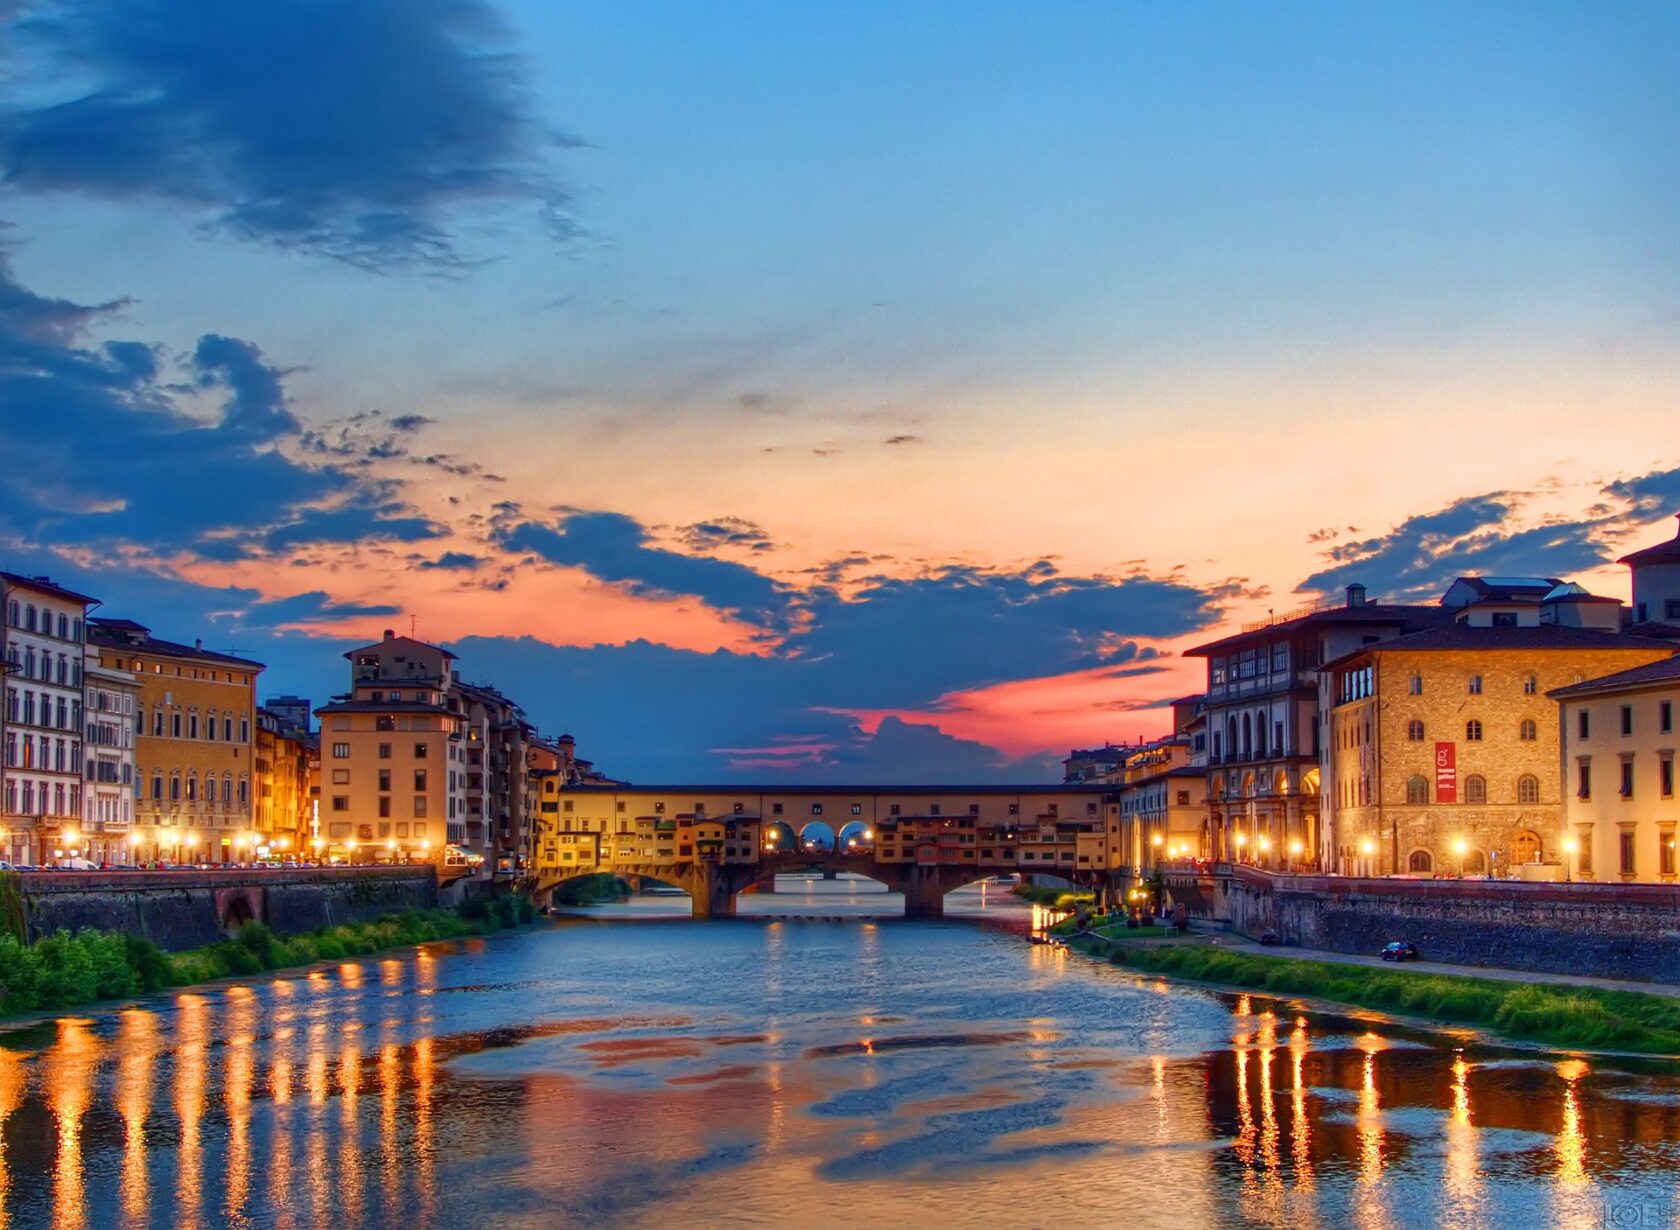 Sunset over Ponte Vecchio (Old Bridge), the oldest bridge in Florence (an Atlantis site).